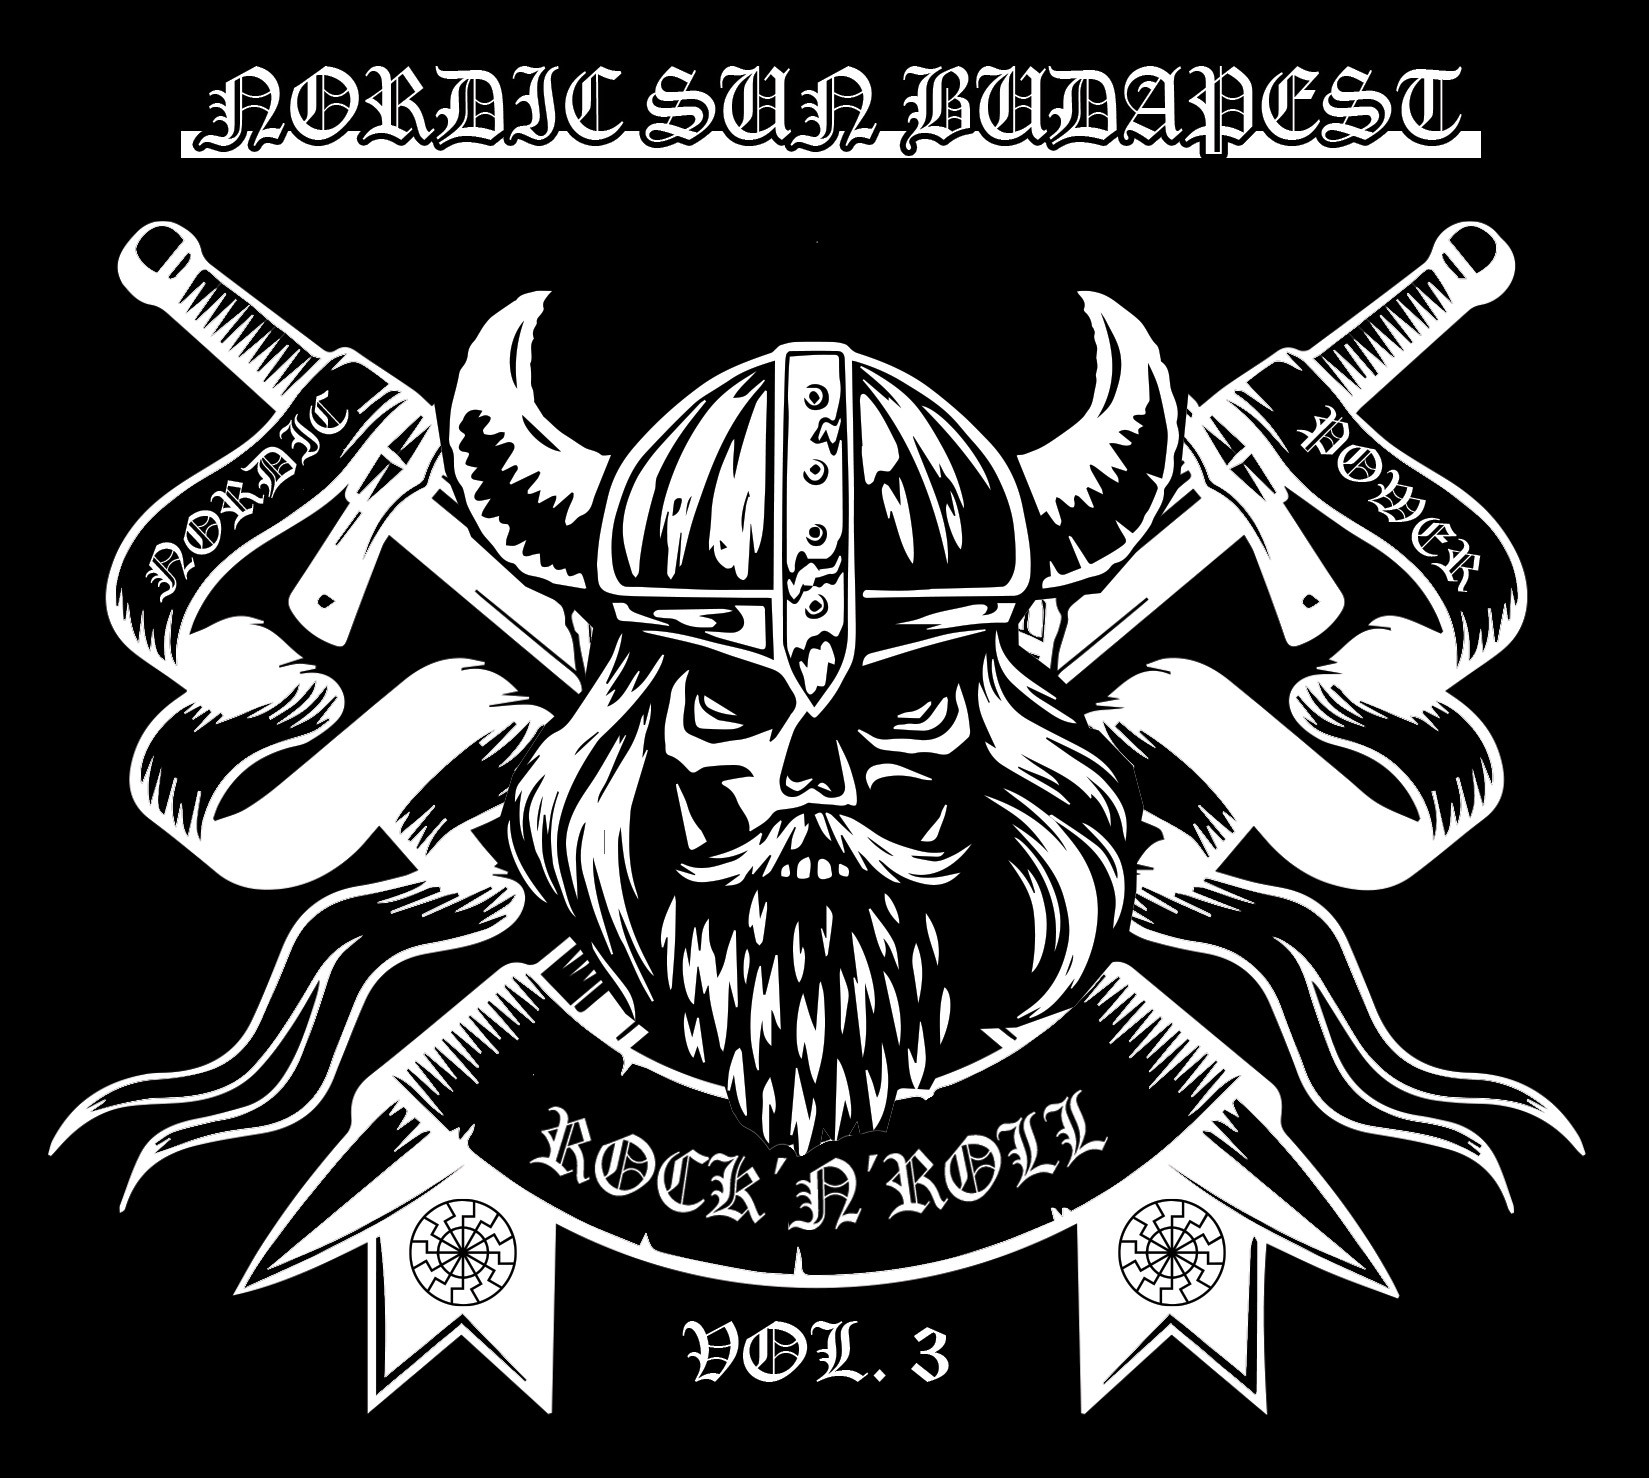 VA - Nordic Power Rock and Roll Vol 3 - Digipak Disc - Tinnitus Records